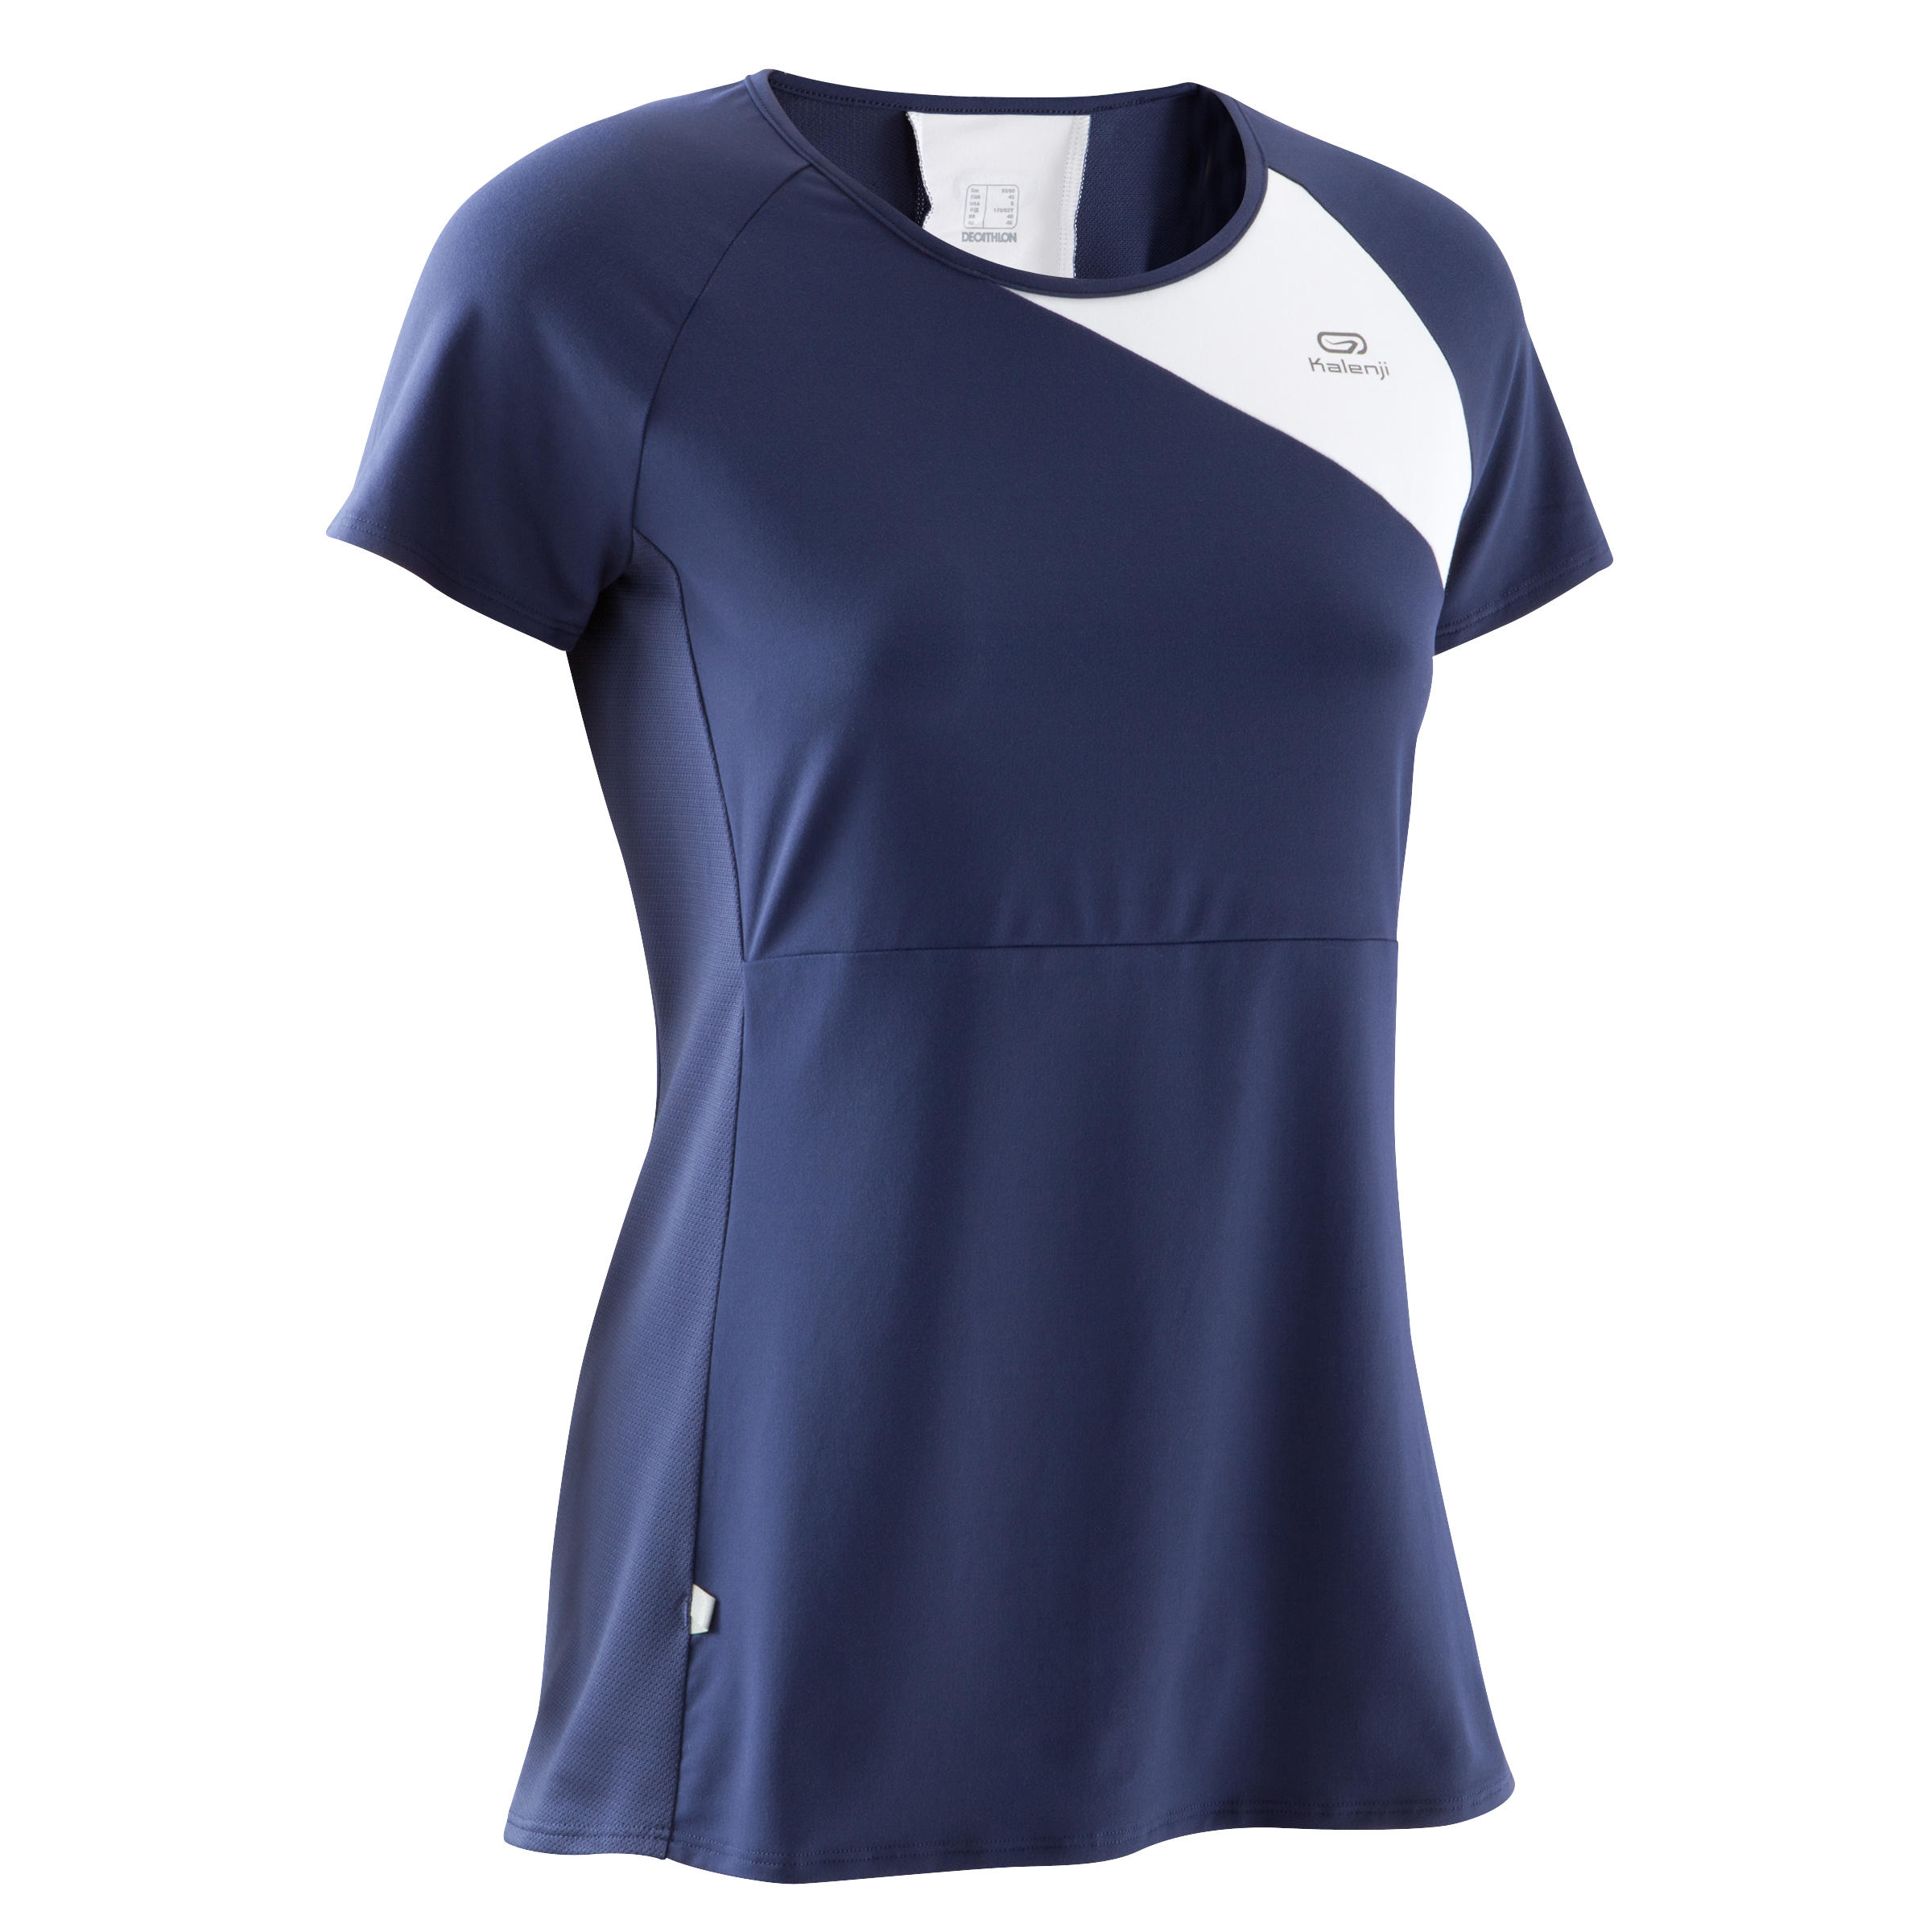 KALENJI Run Dry + Women's Running T-Shirt - Navy Blue 